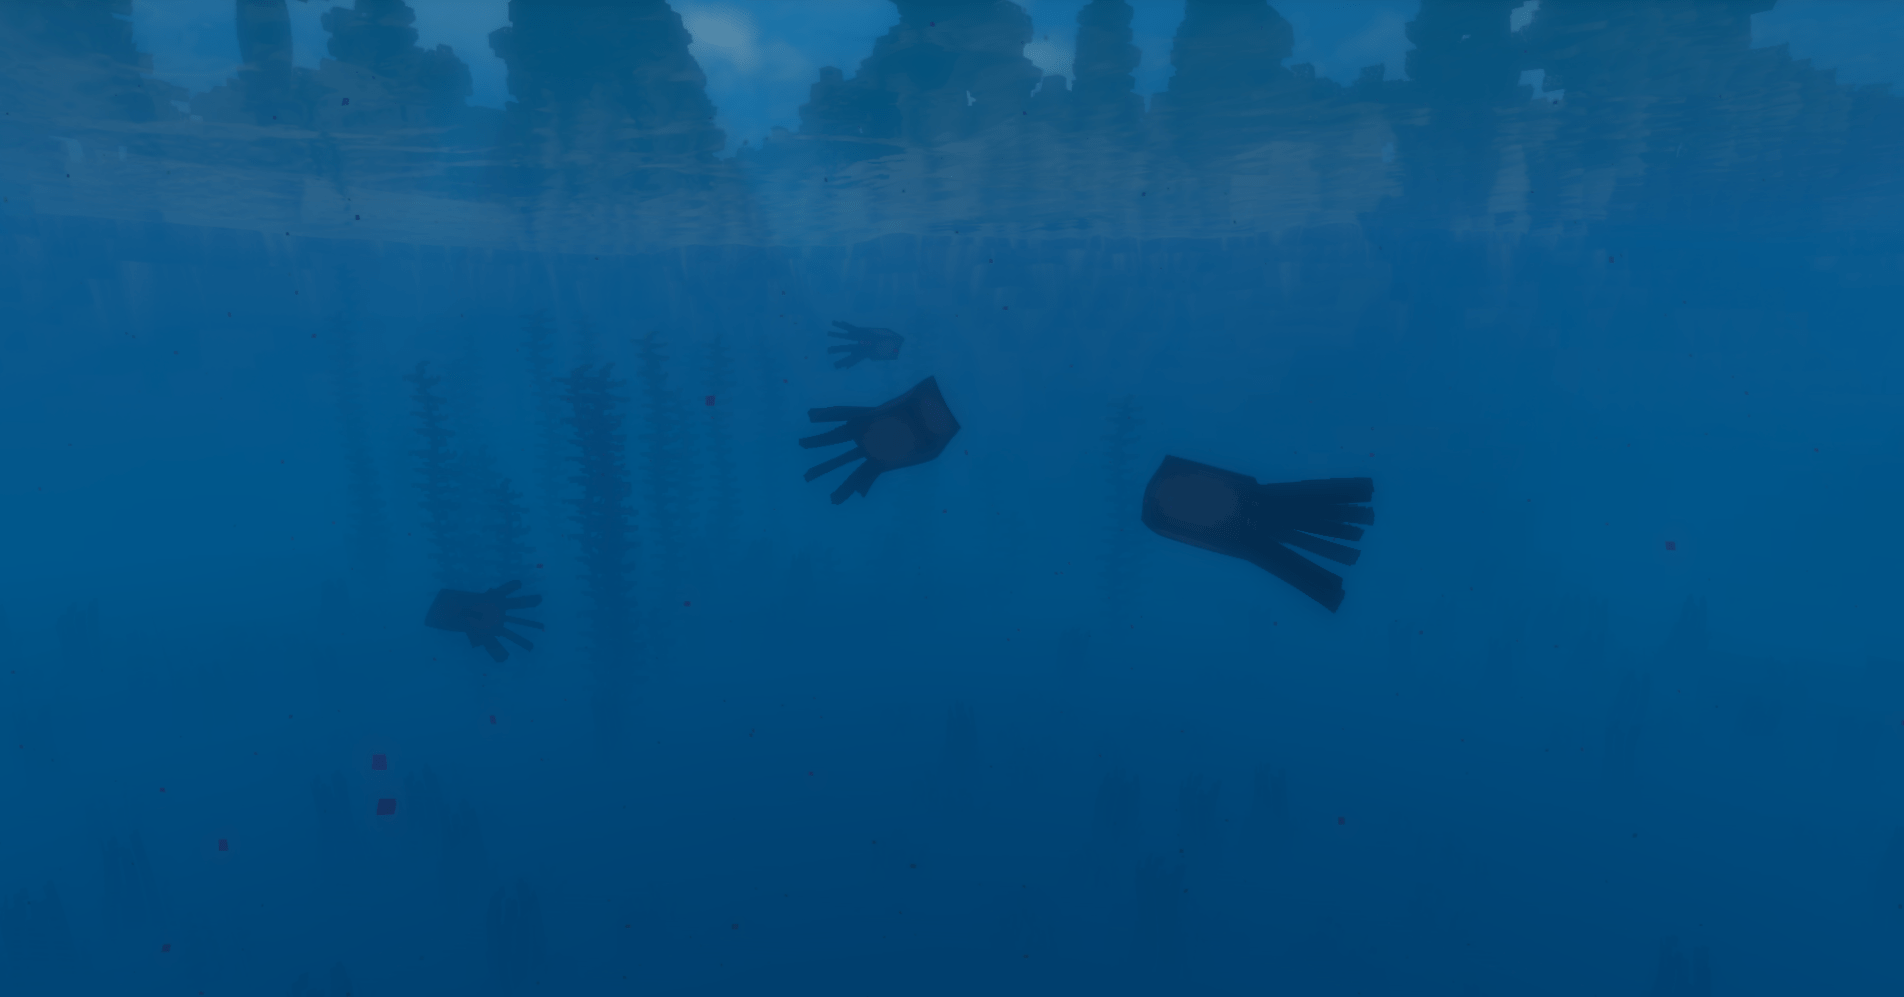 Pictures of squids underwater in Minecraft